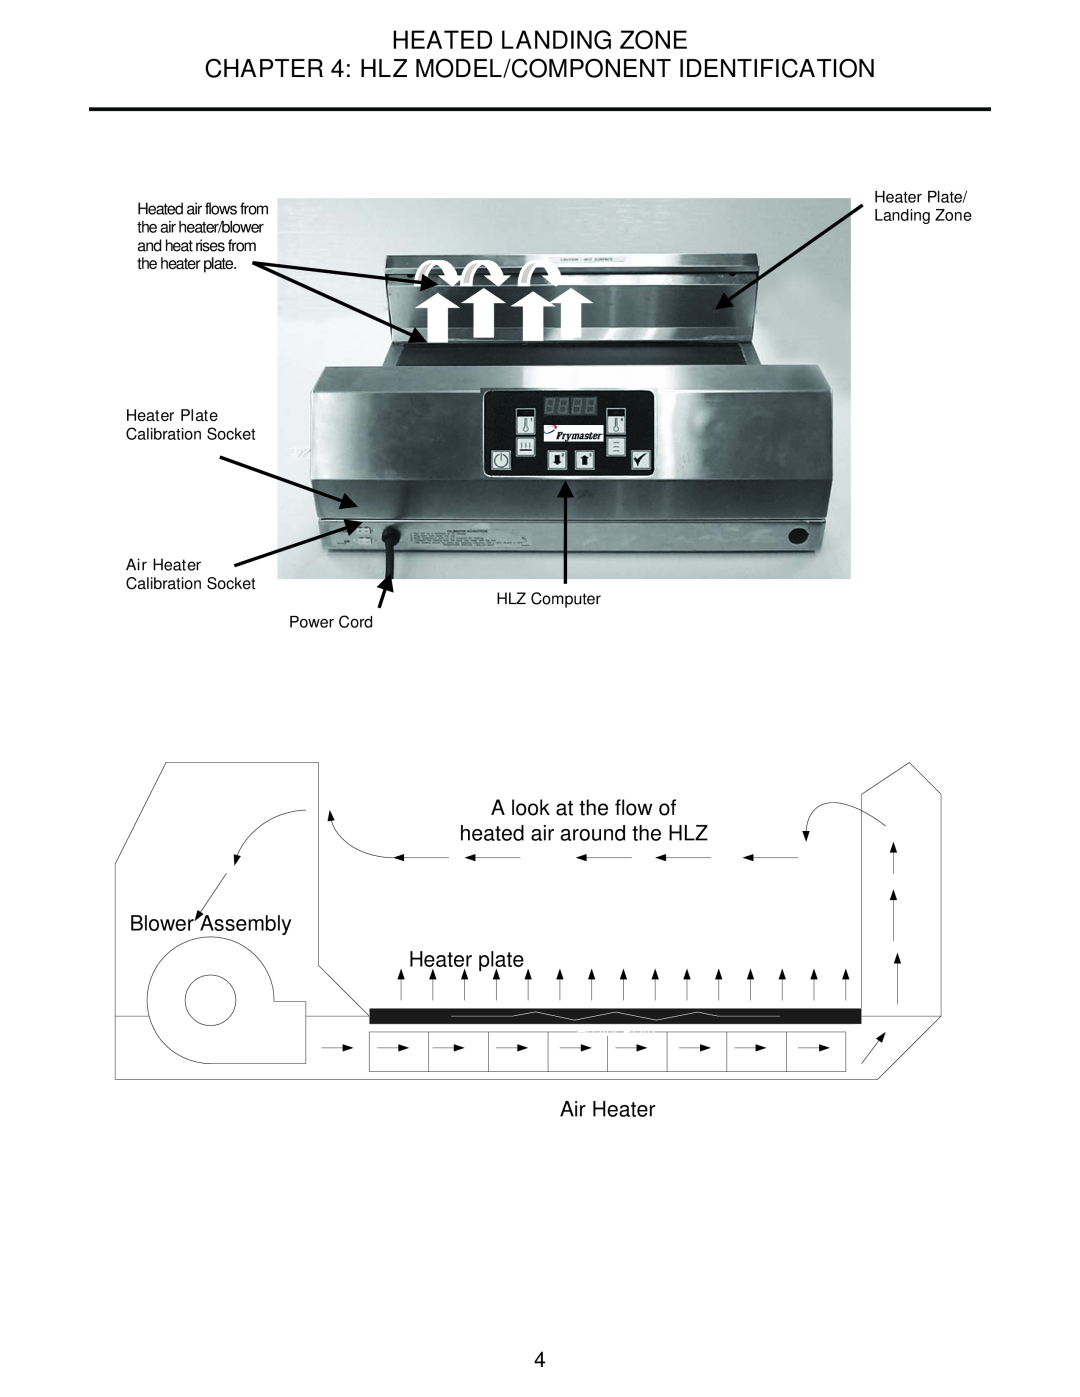 Frymaster HLZ Hlz Model/Component Identification, Heated Landing Zone, Heater Plate, Calibration Socket, Air Heater 